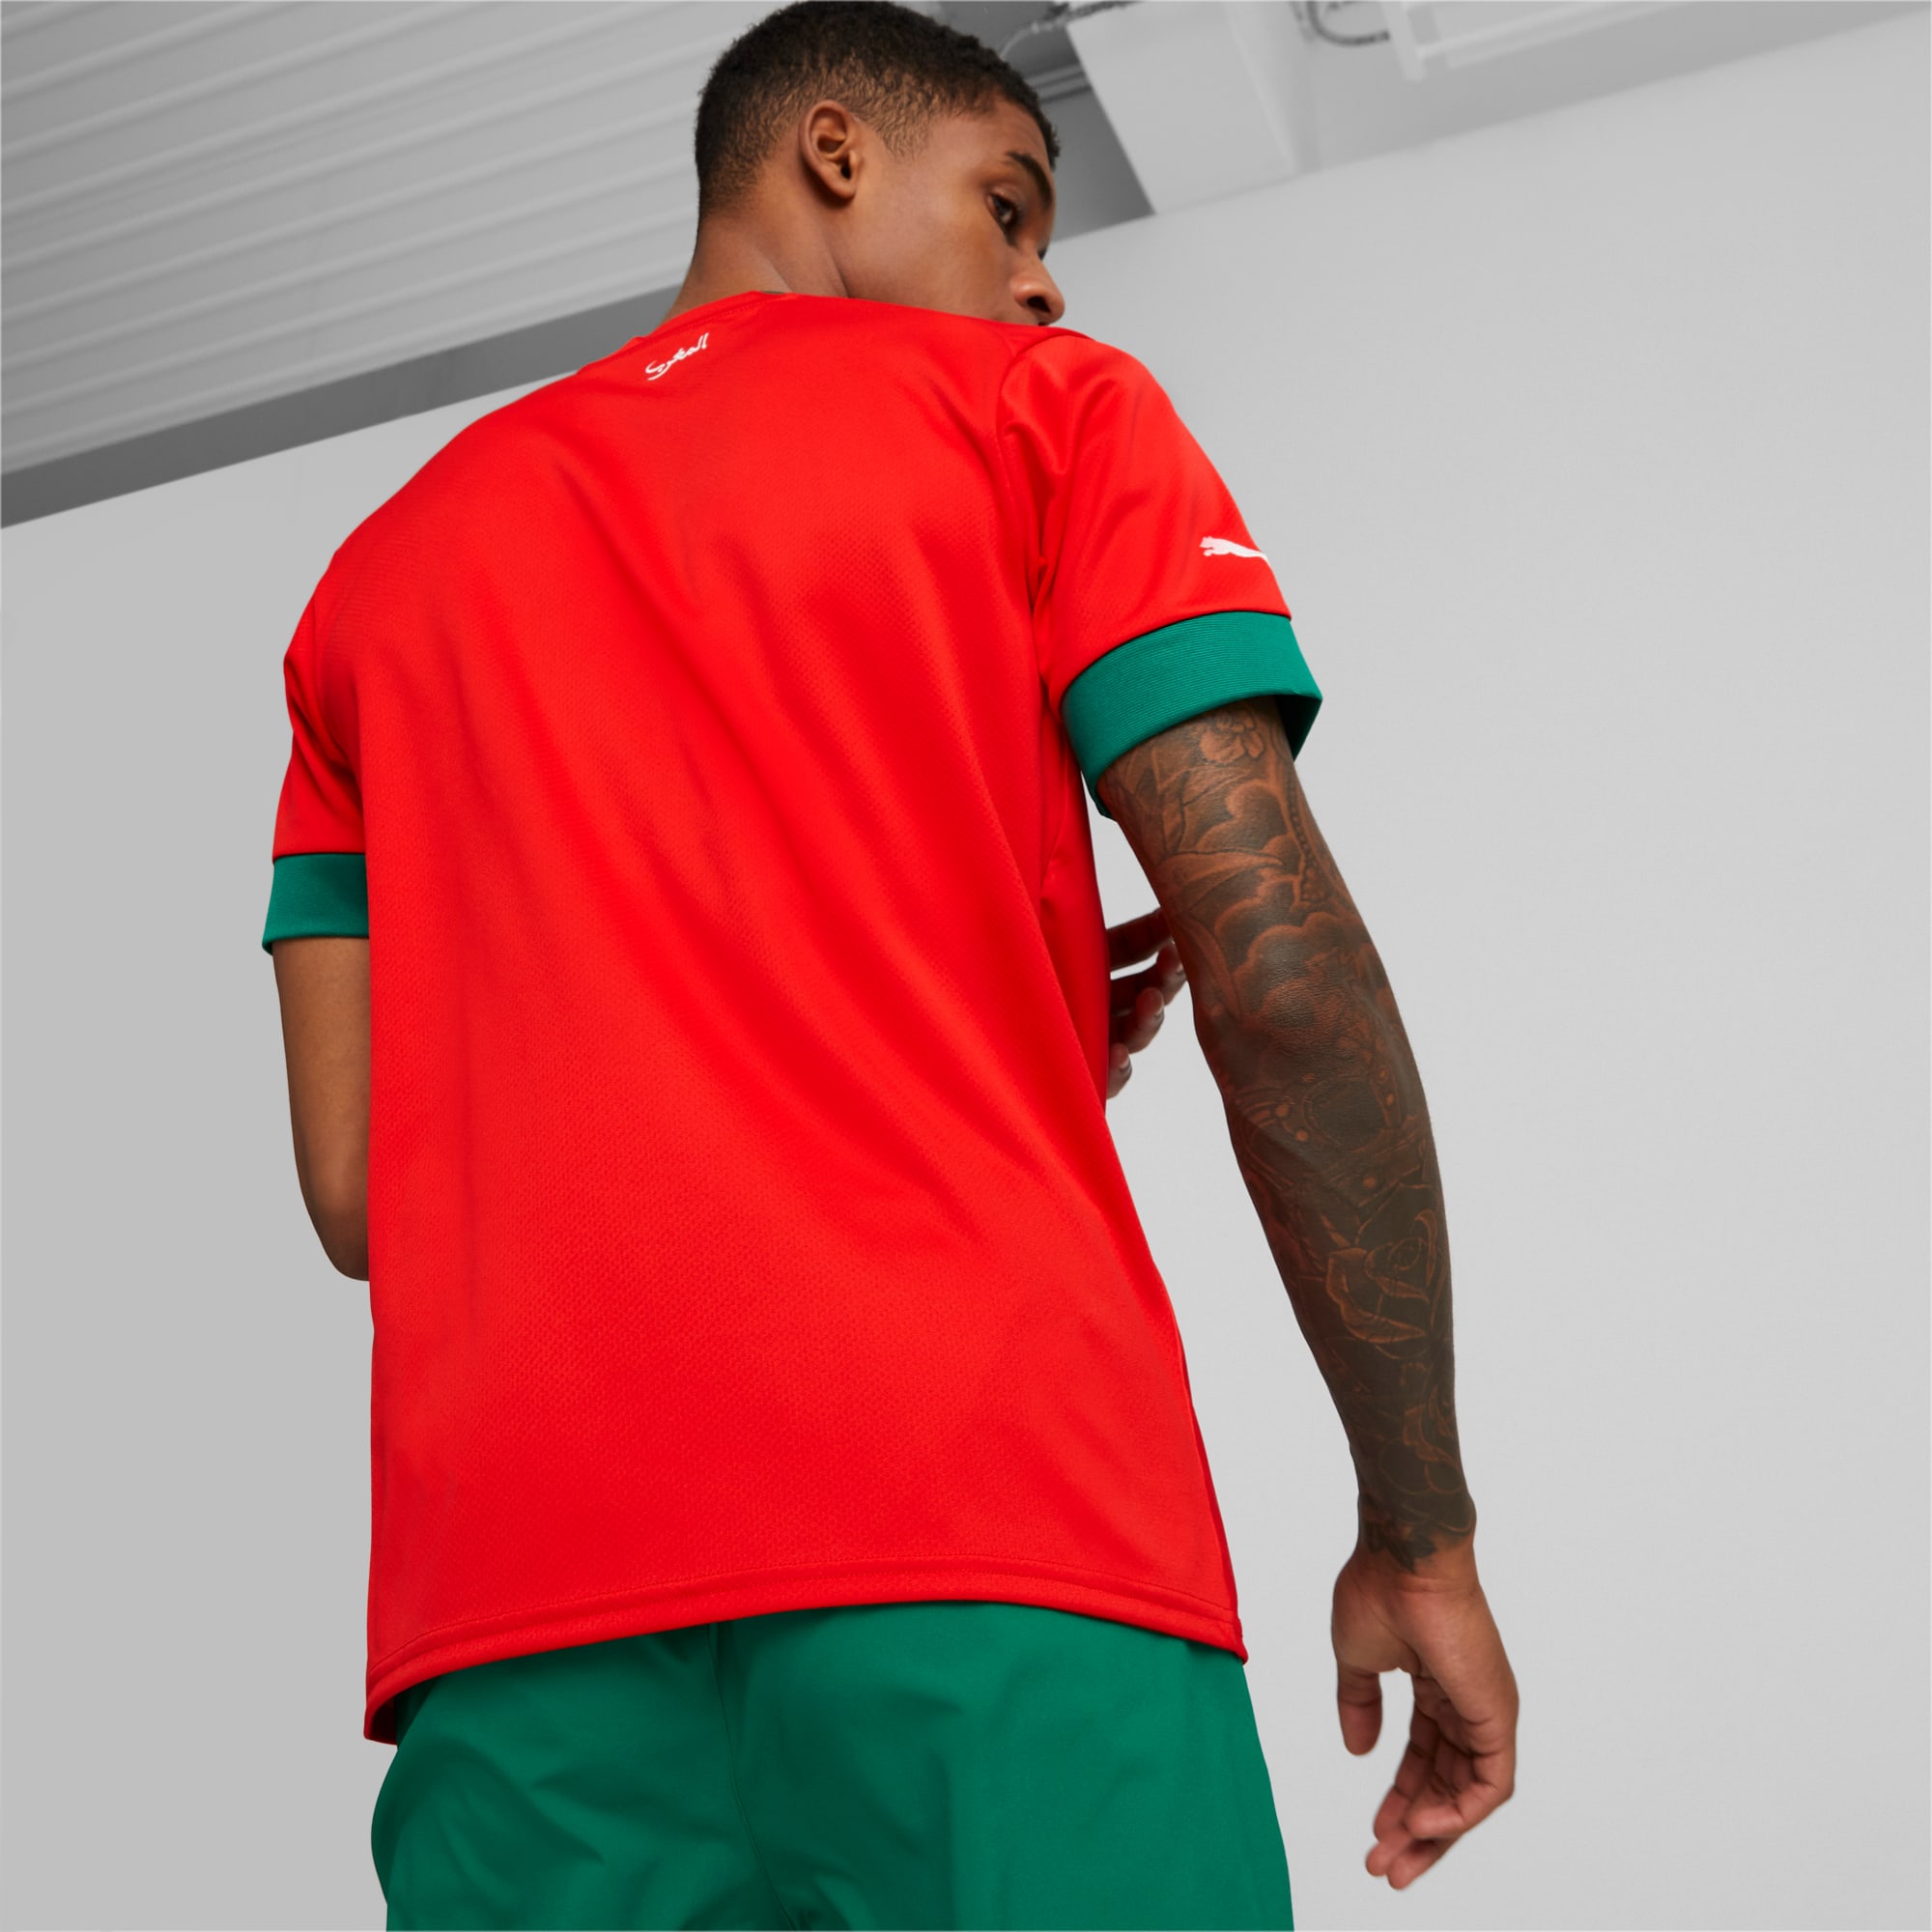 PUMA Maillot de Football Morocco Replica Homme - Vert Vert et rouge -  Cdiscount Sport